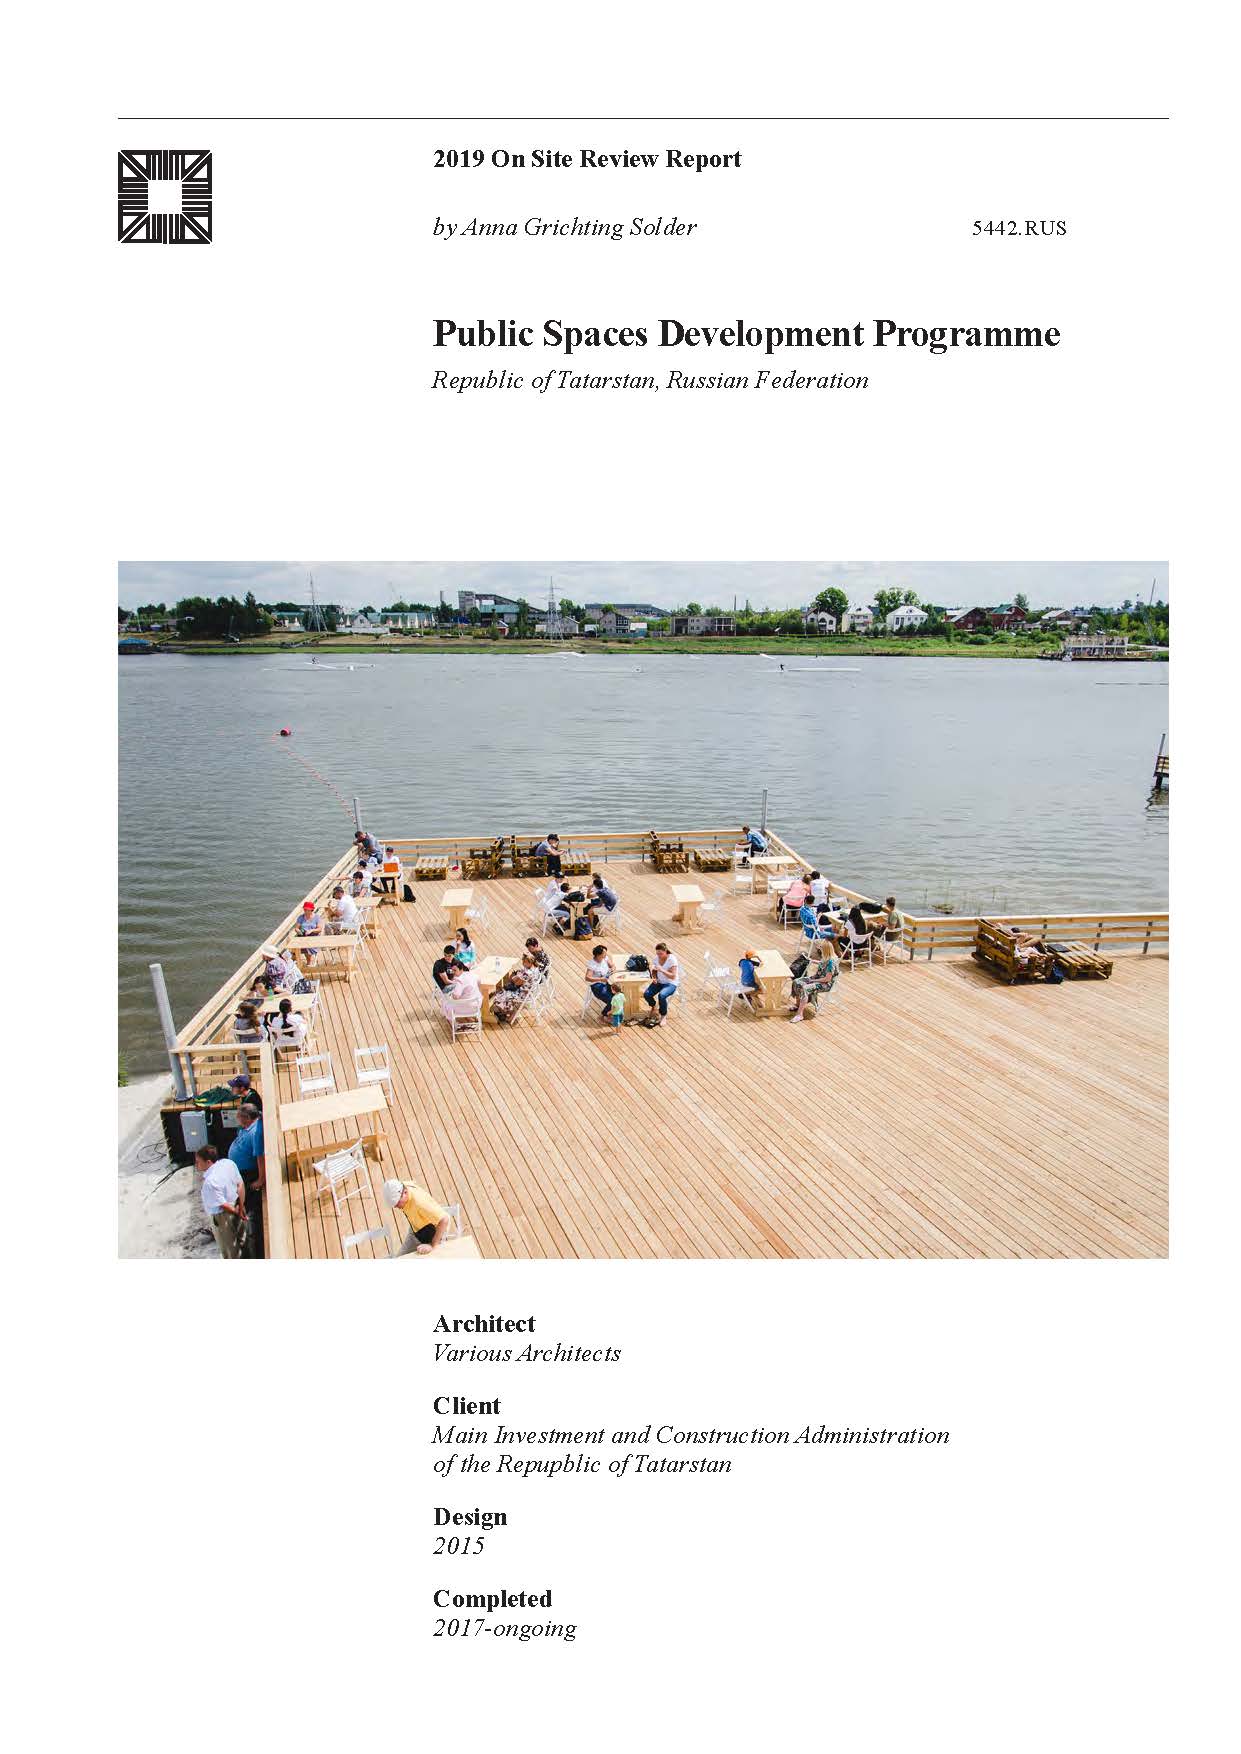 Public Spaces Development Programme On-site Review Report